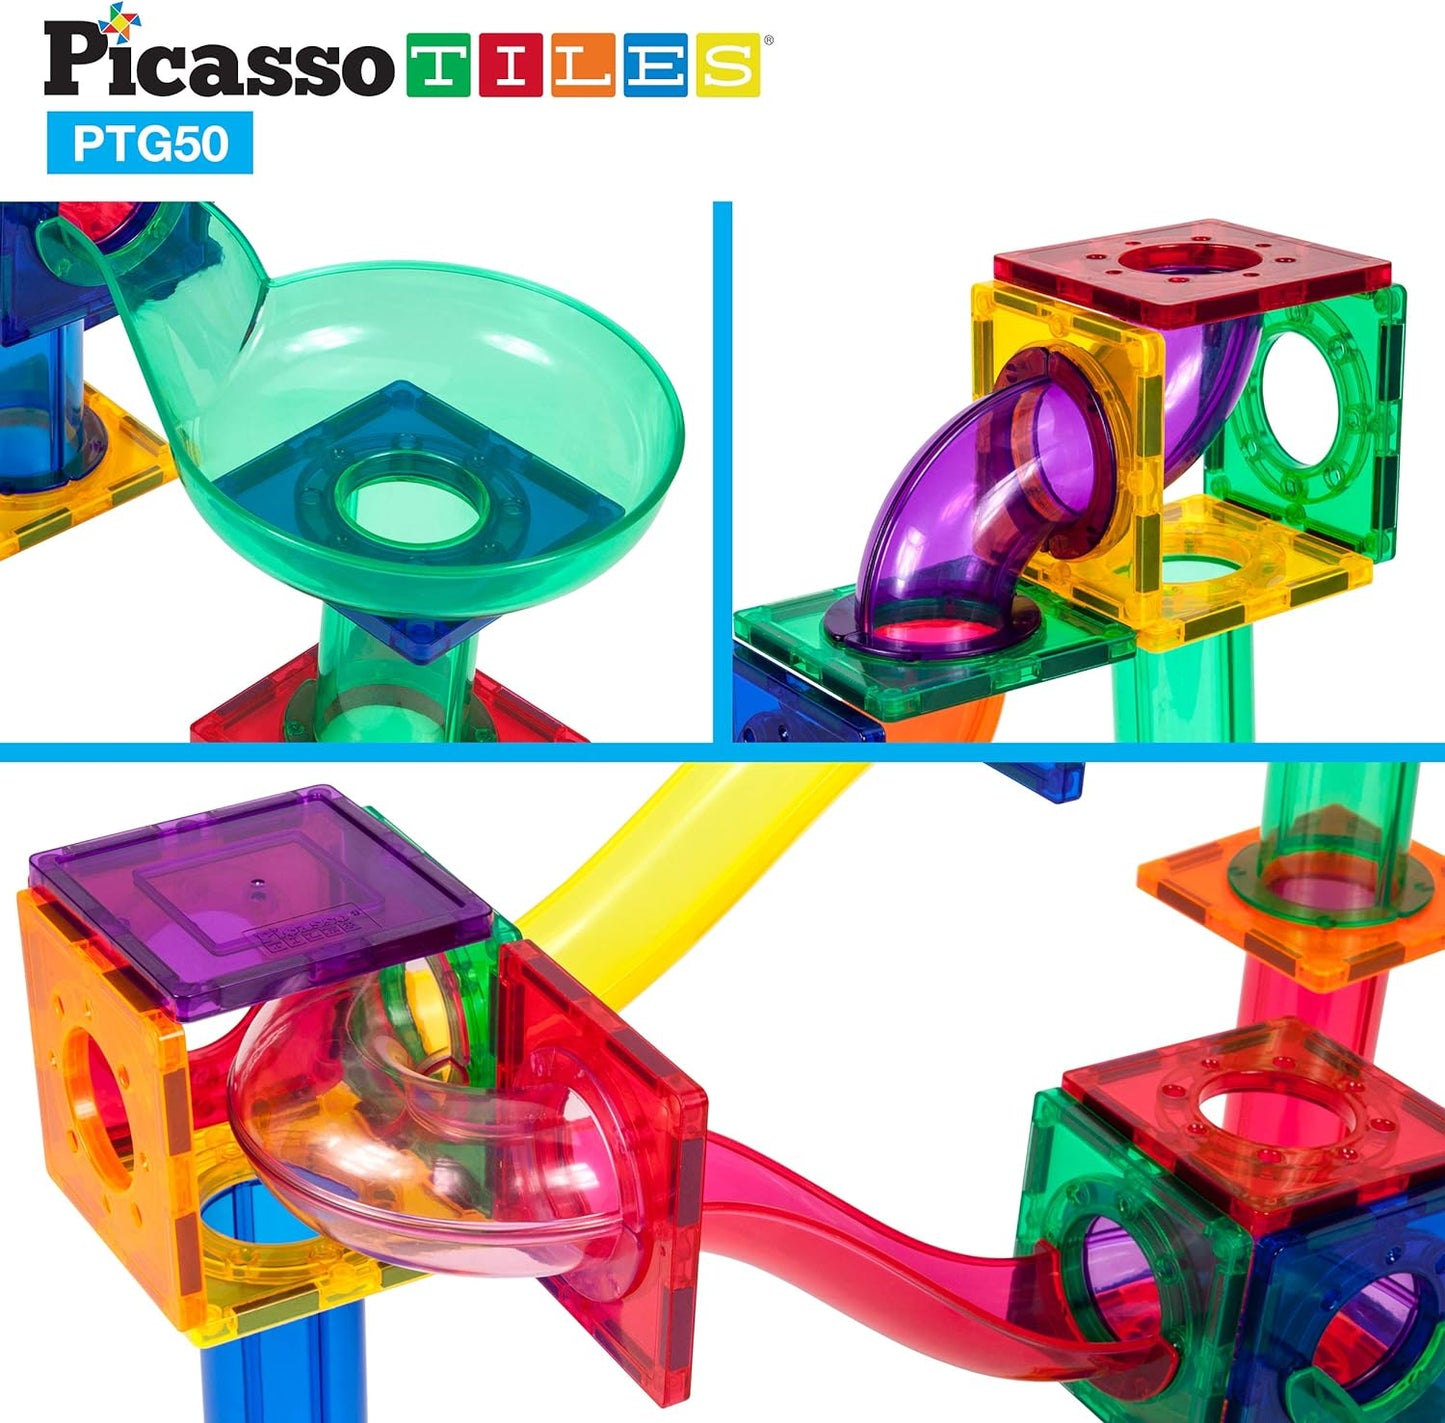 PicassoTiles 50 PC Marble Run Building Blocks